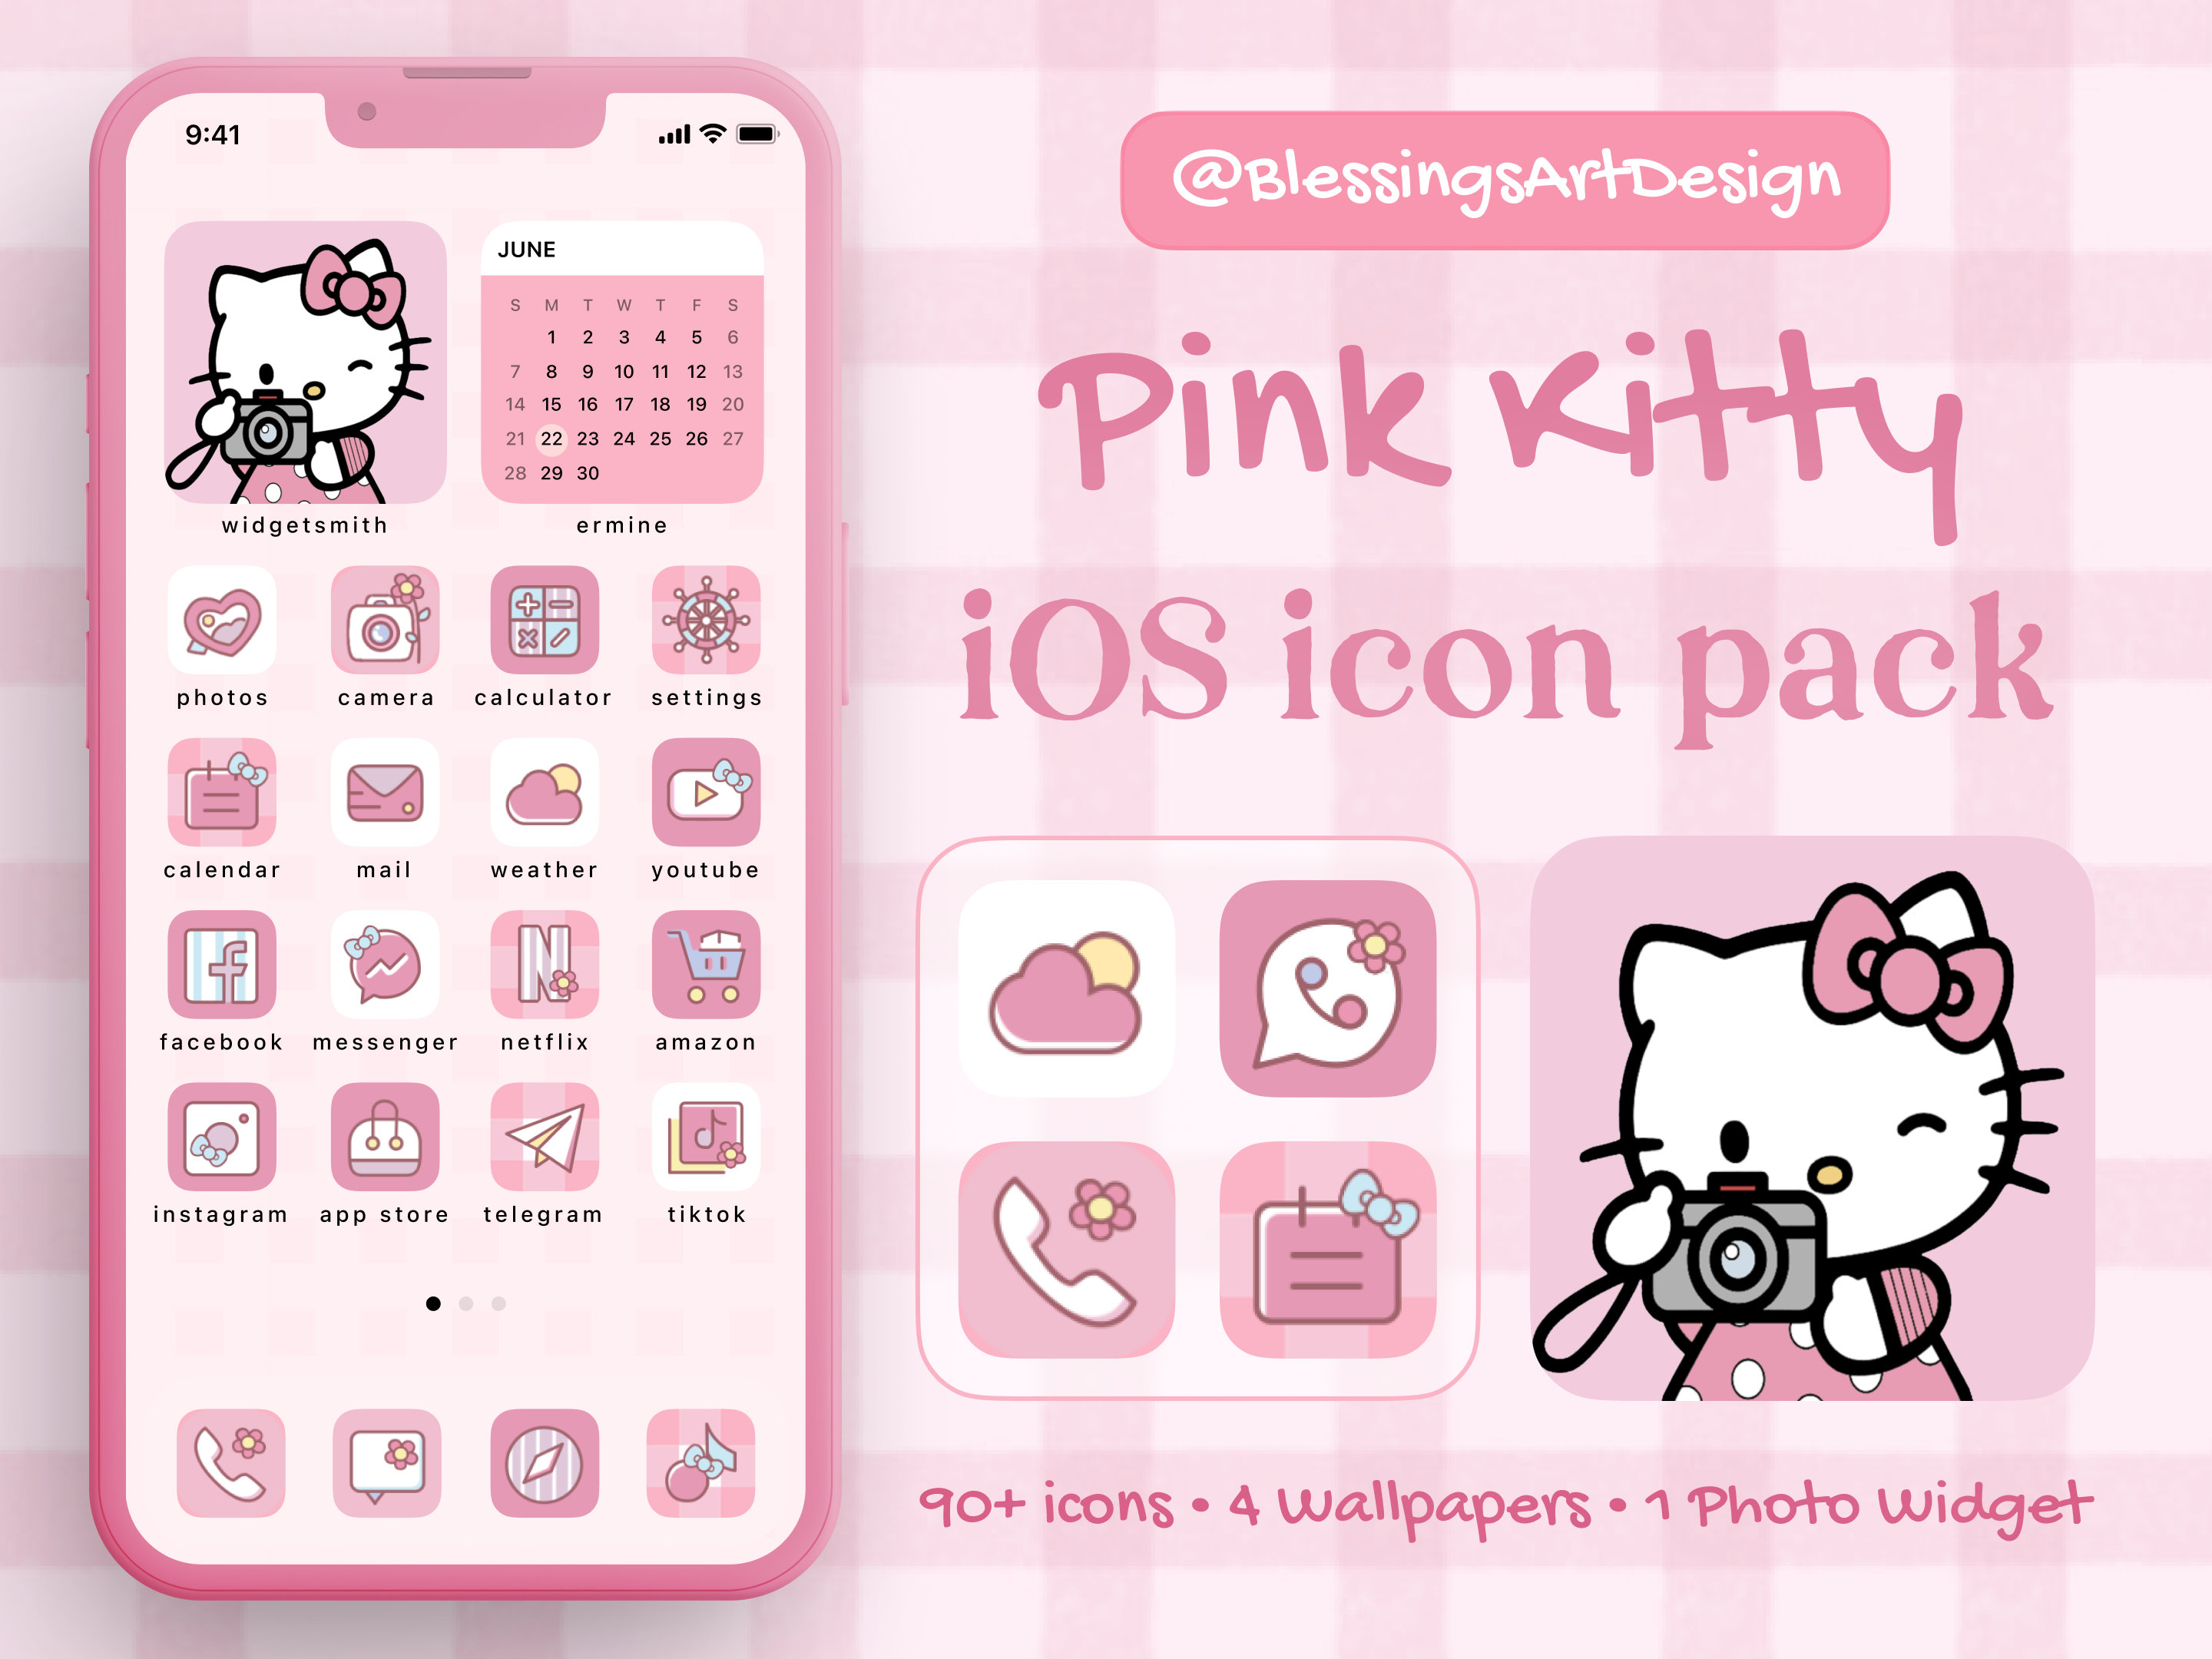 Pink Kitty iPhone iOS14+ App Icon Theme – Modish Culture